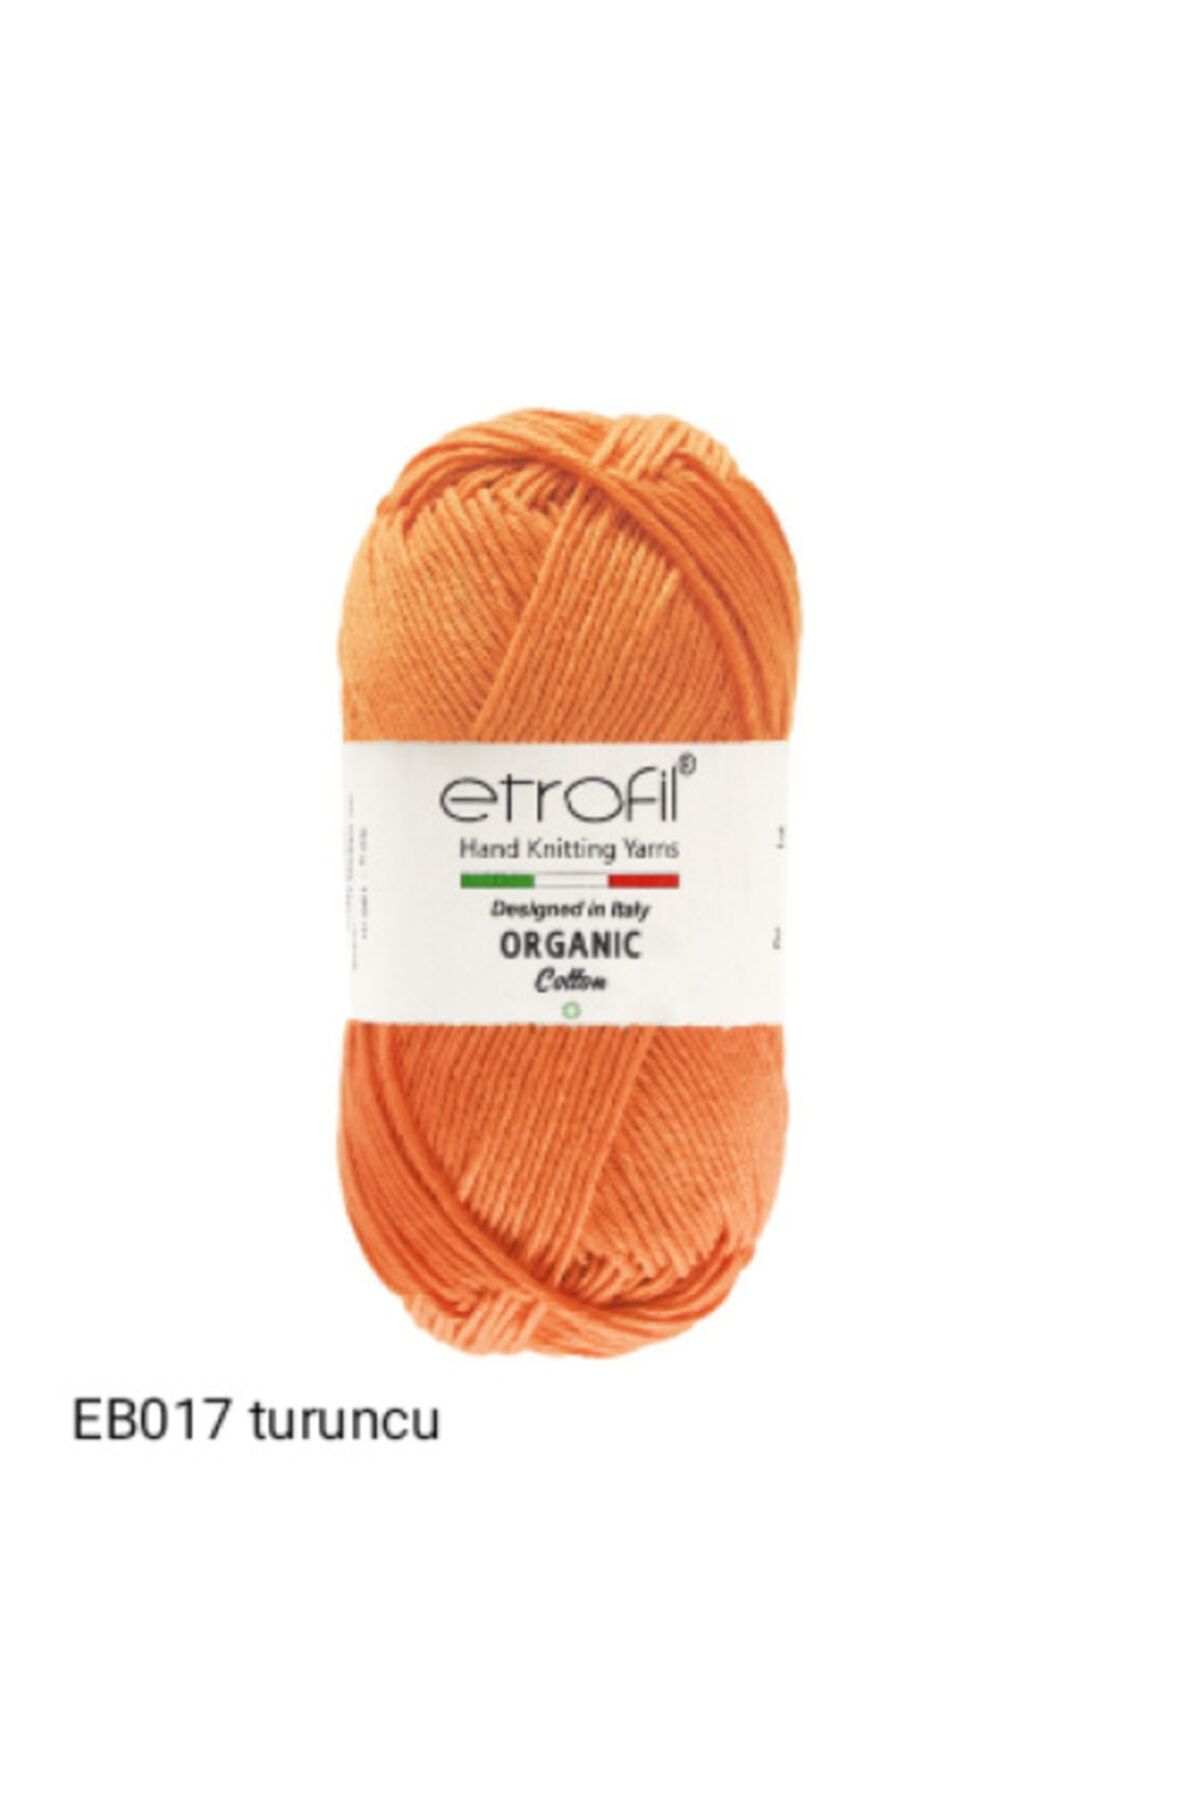 Etrofil Organıc Cotton Ip 017 Turuncu ( 5 Adet ) 017 turuncu